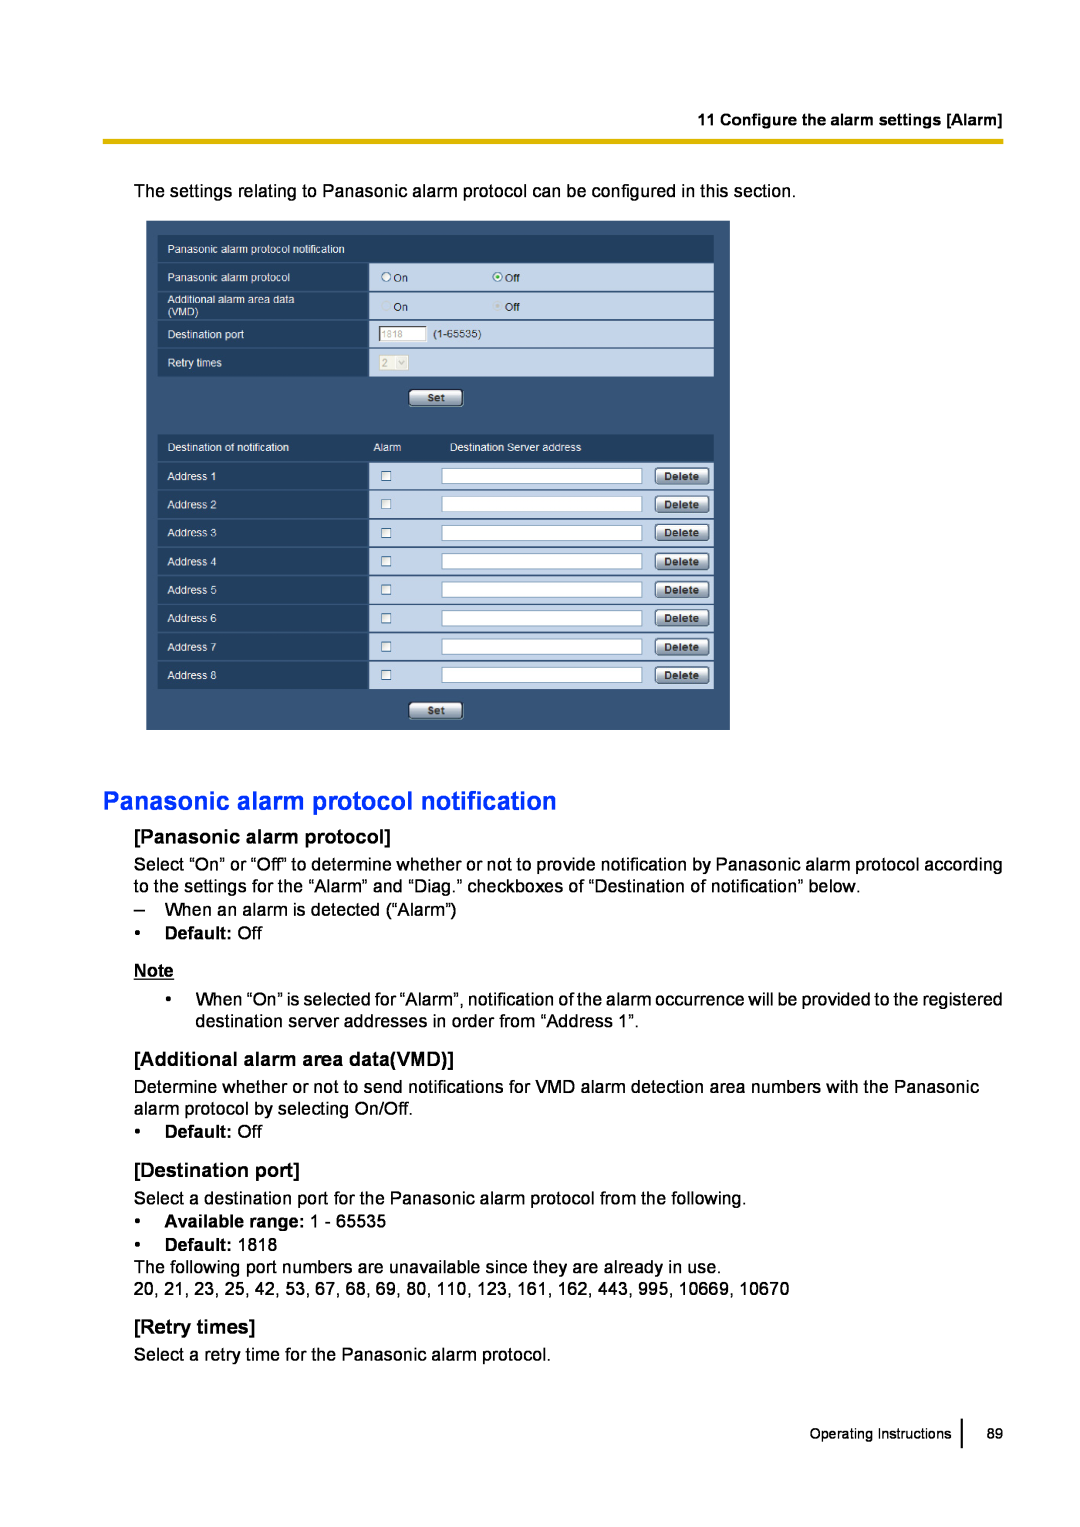 Panasonic BL-VT164W Panasonic alarm protocol notification, Additional alarm area dataVMD, Destination port, Retry times 